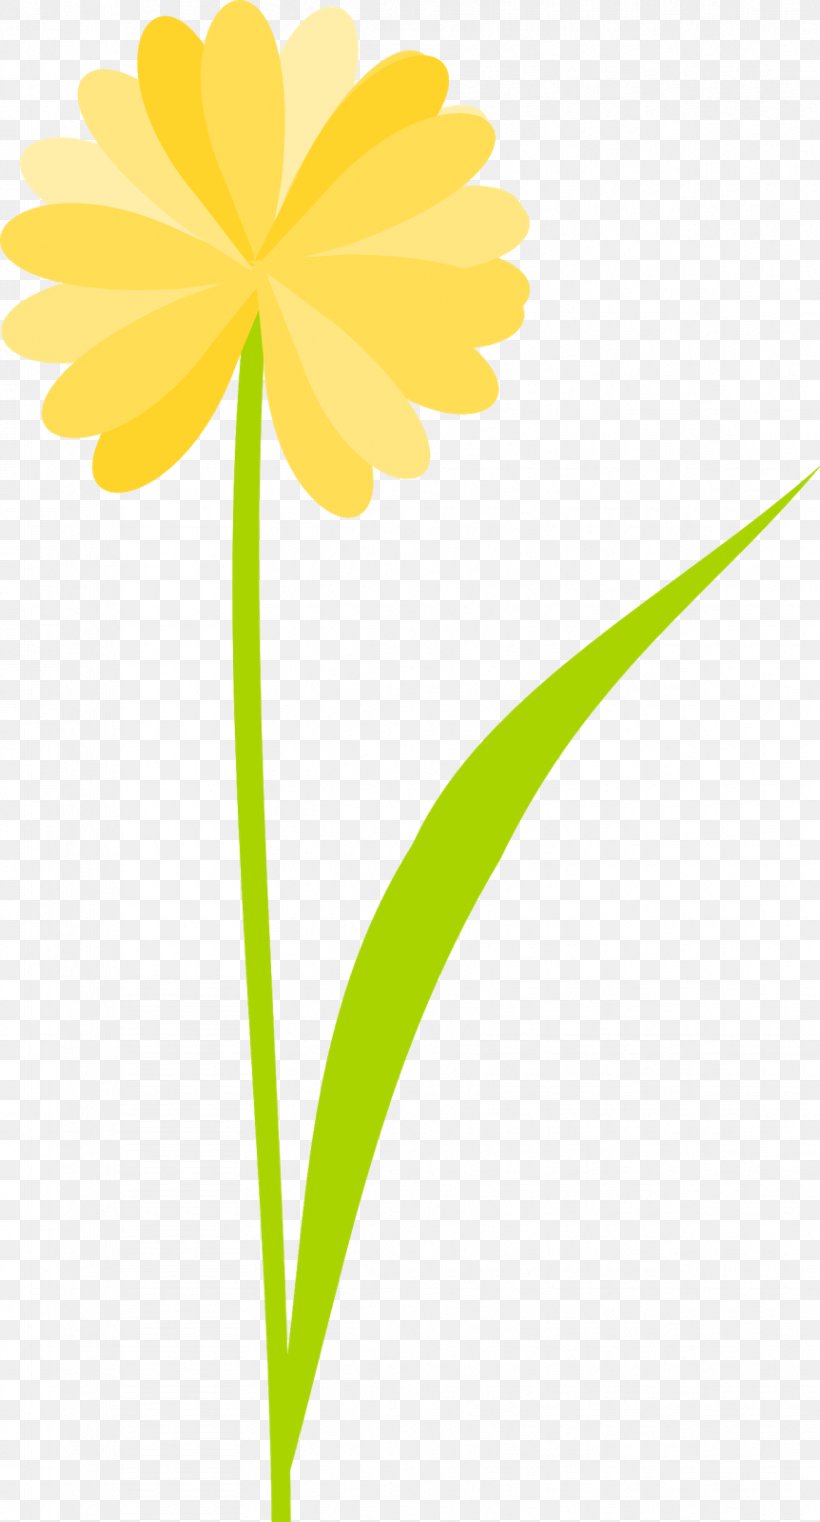 Dandelion Cut Flowers Leaf Plant Stem Clip Art, PNG, 862x1600px, Dandelion, Cut Flowers, Daisy, Daisy Family, Flora Download Free